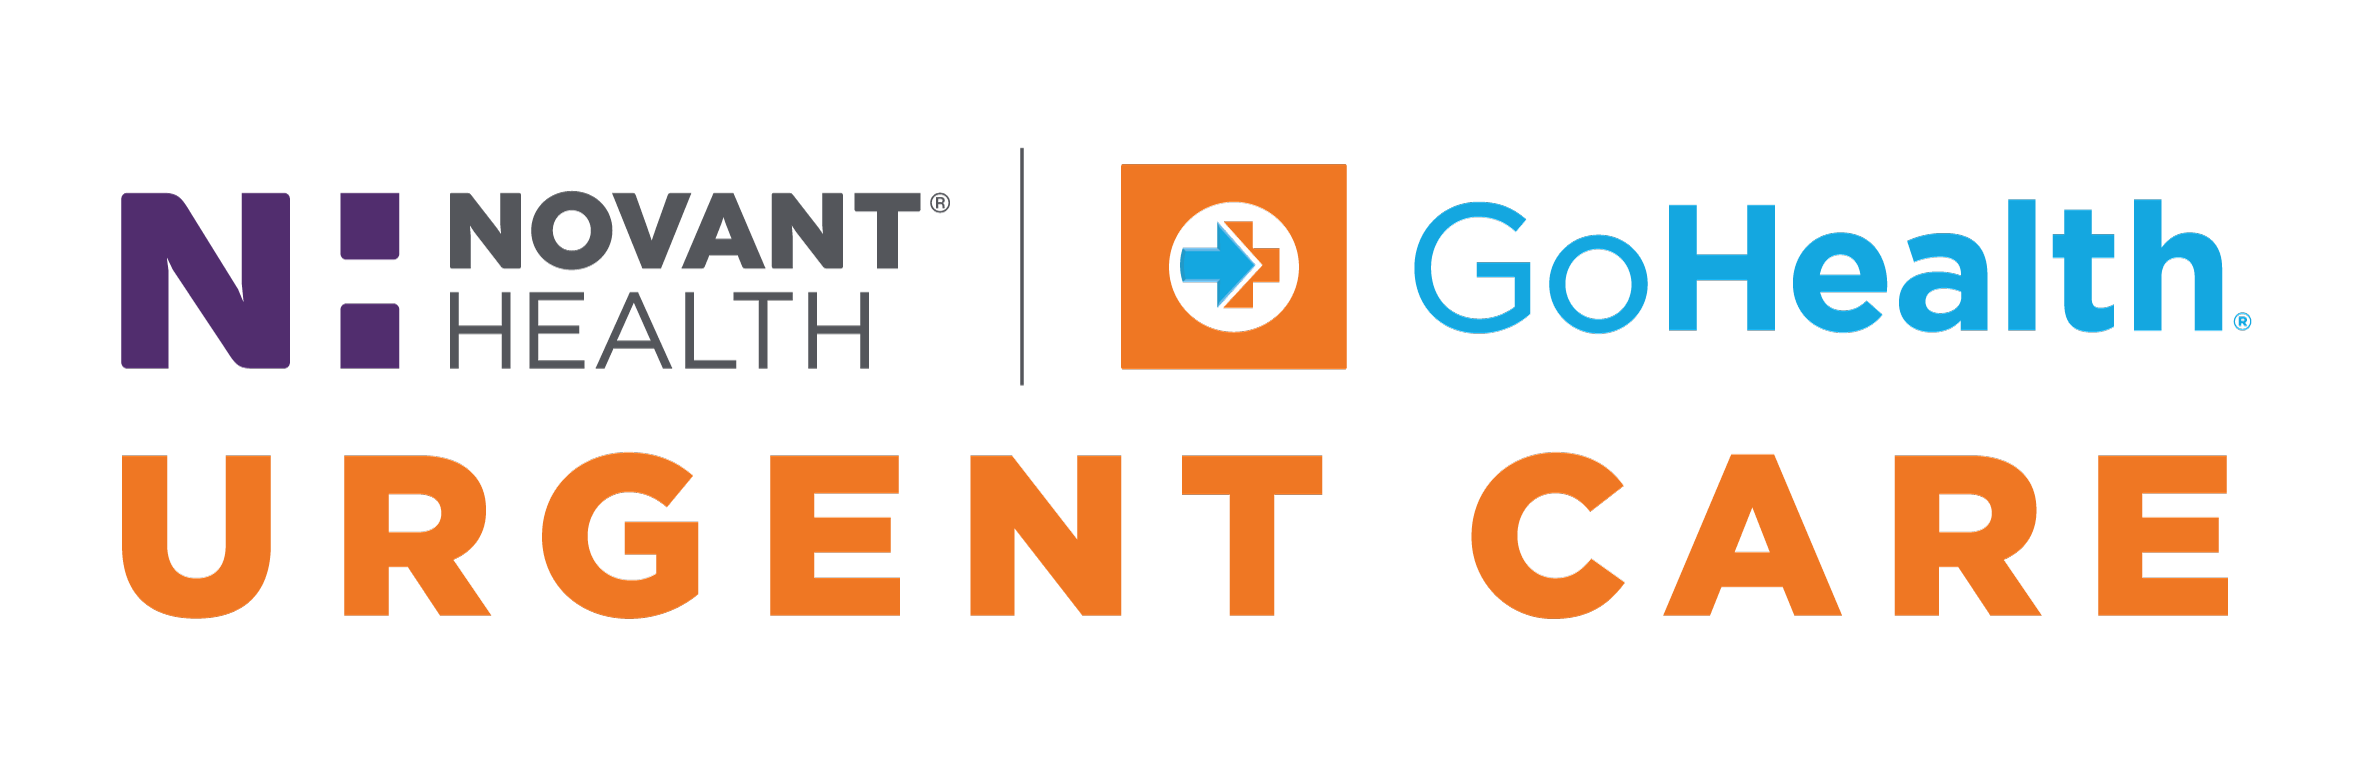 Novant Health- GoHealth Urgent Care - North Carolina Virtual Logo